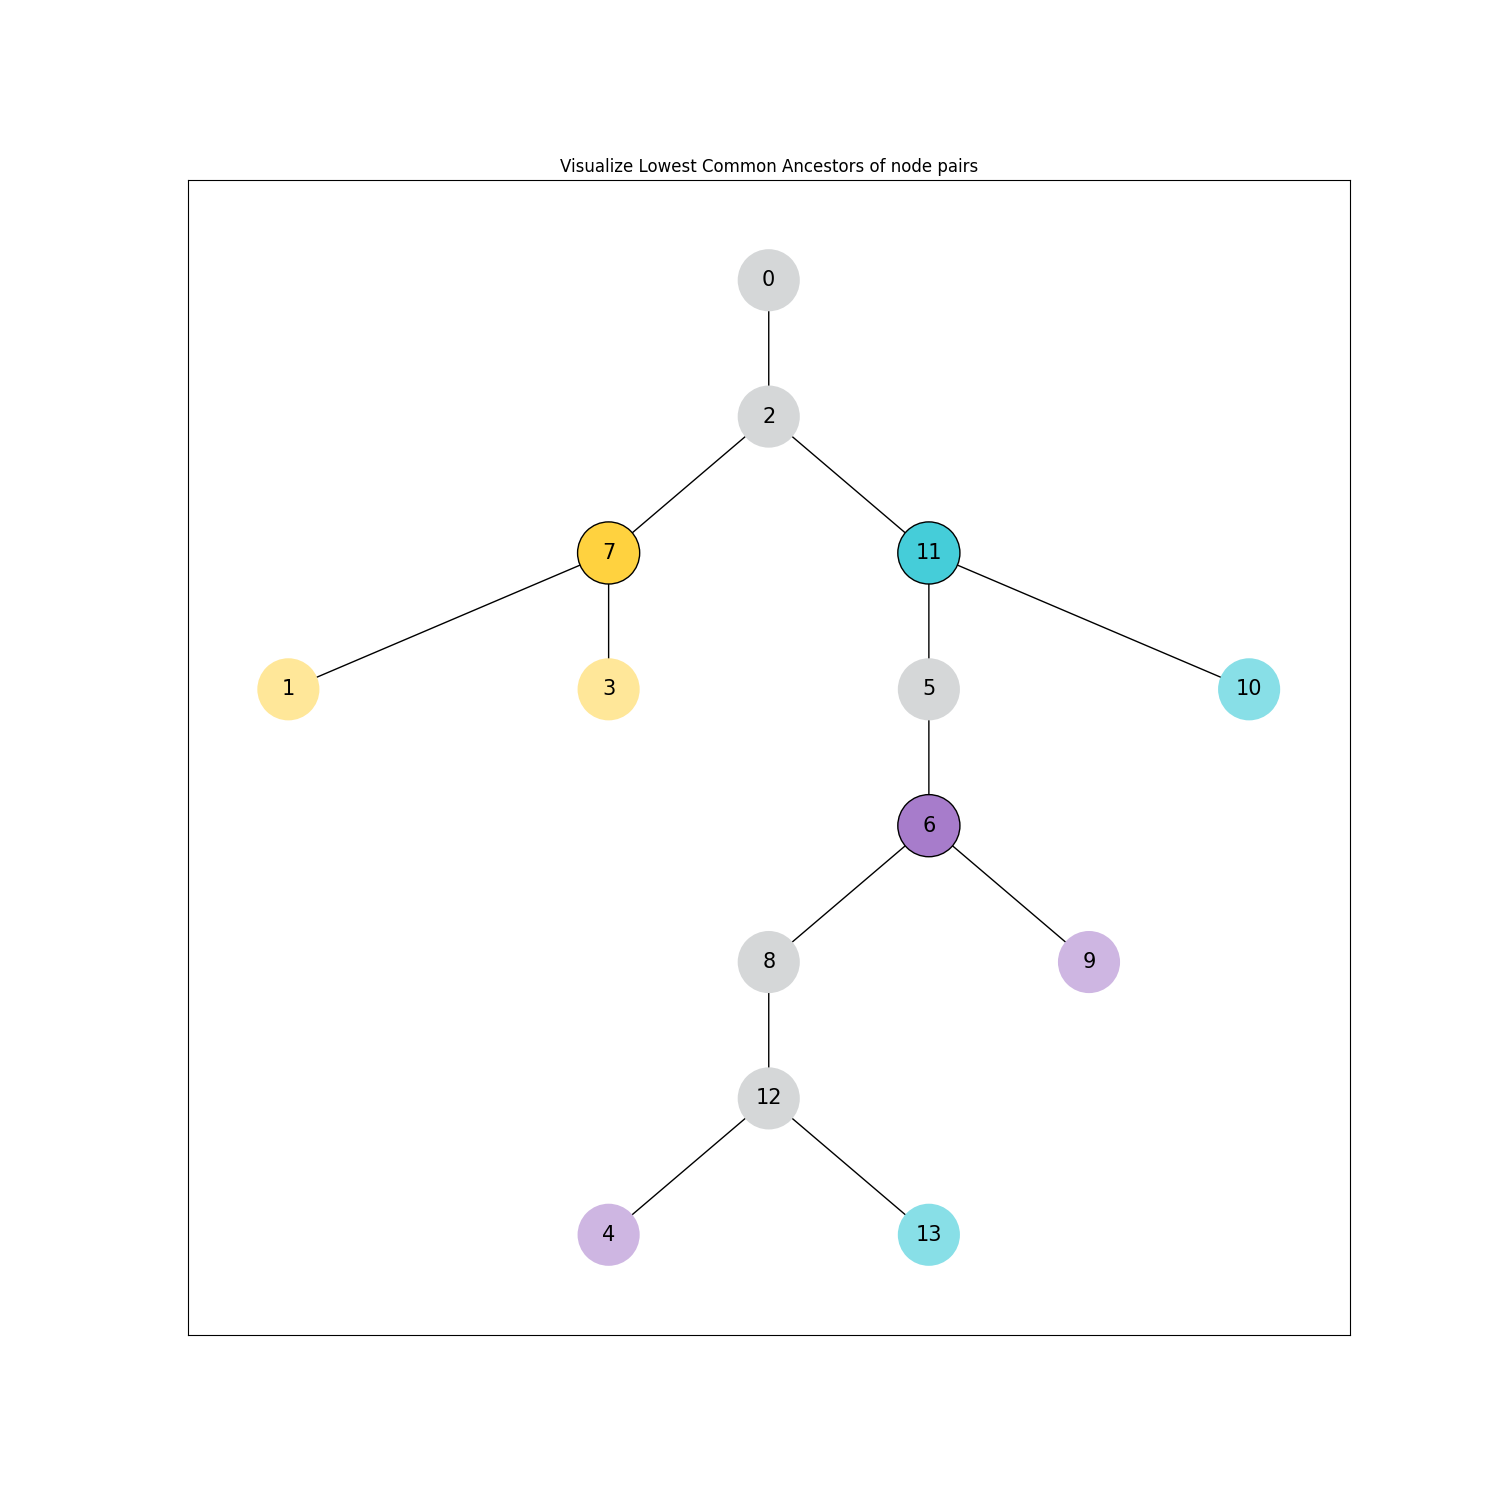 Visualize Lowest Common Ancestors of node pairs